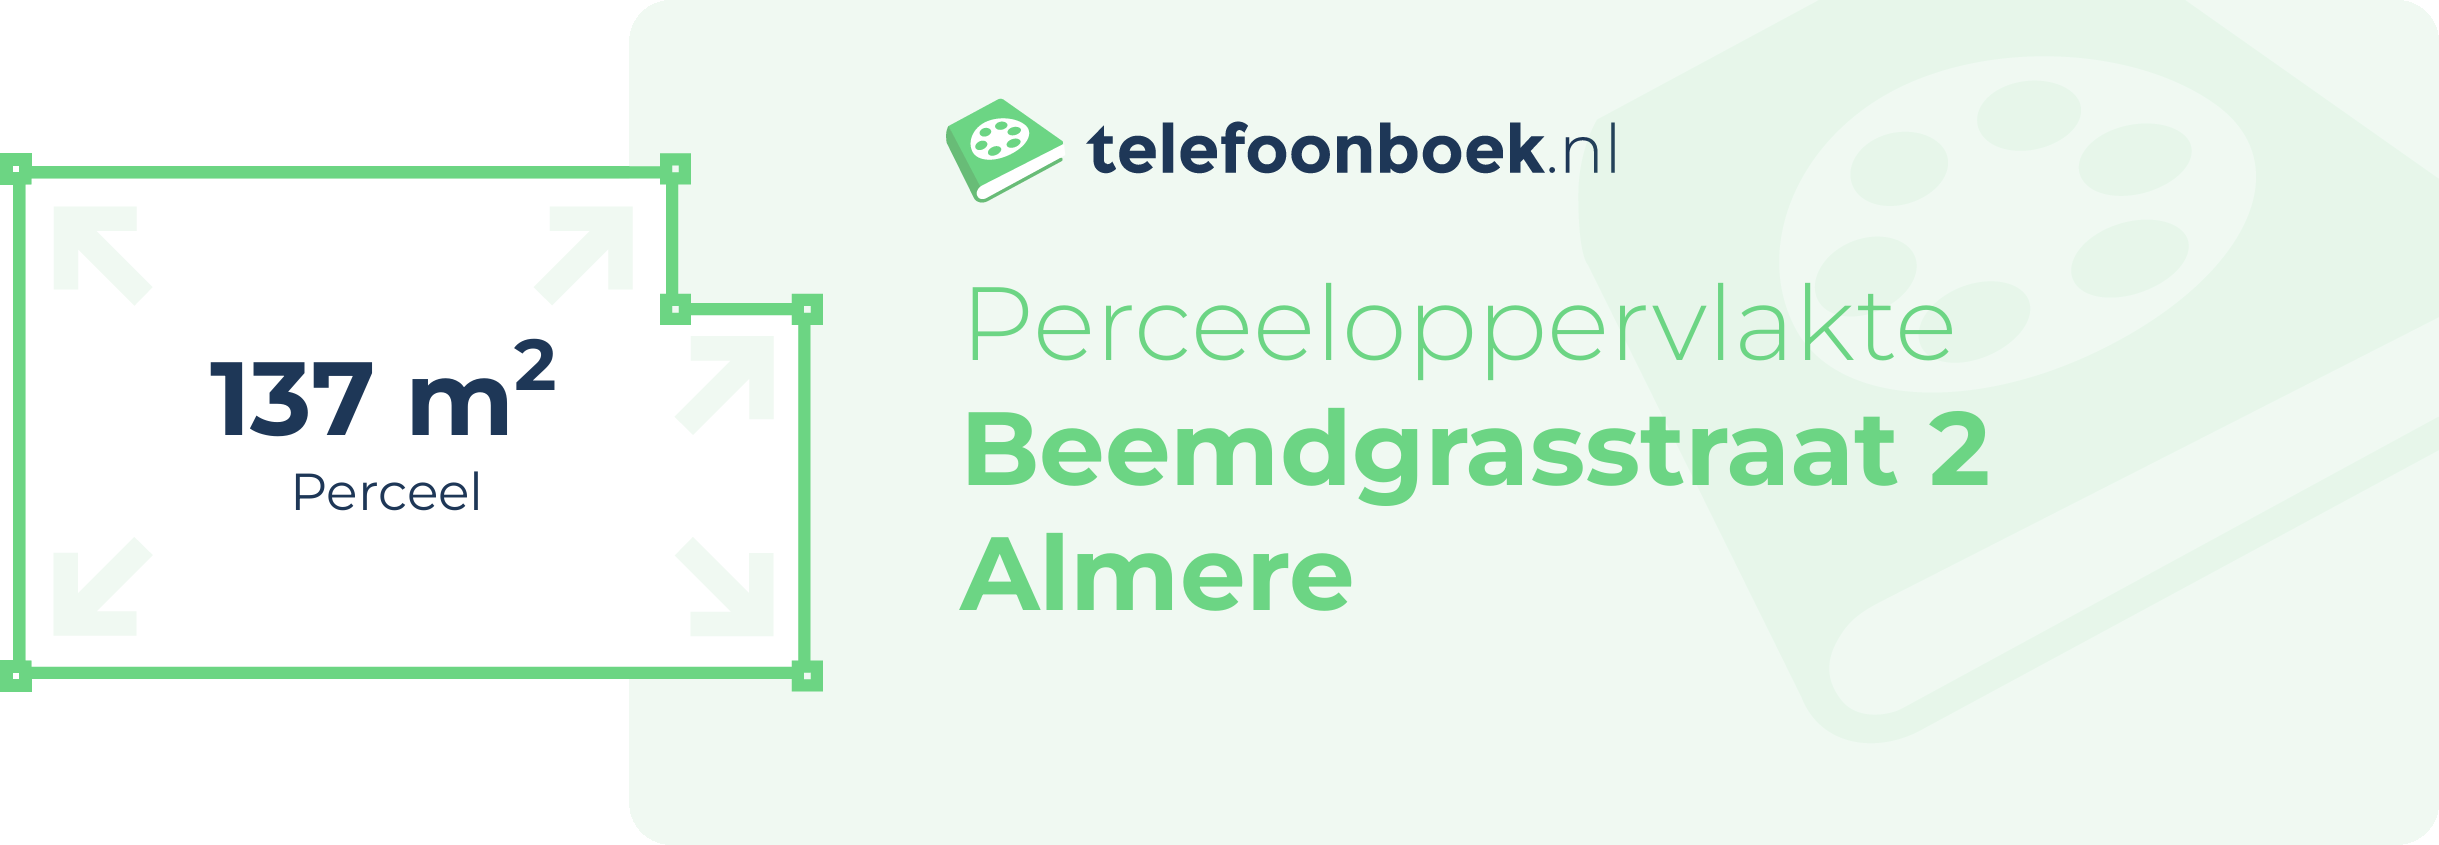 Perceeloppervlakte Beemdgrasstraat 2 Almere